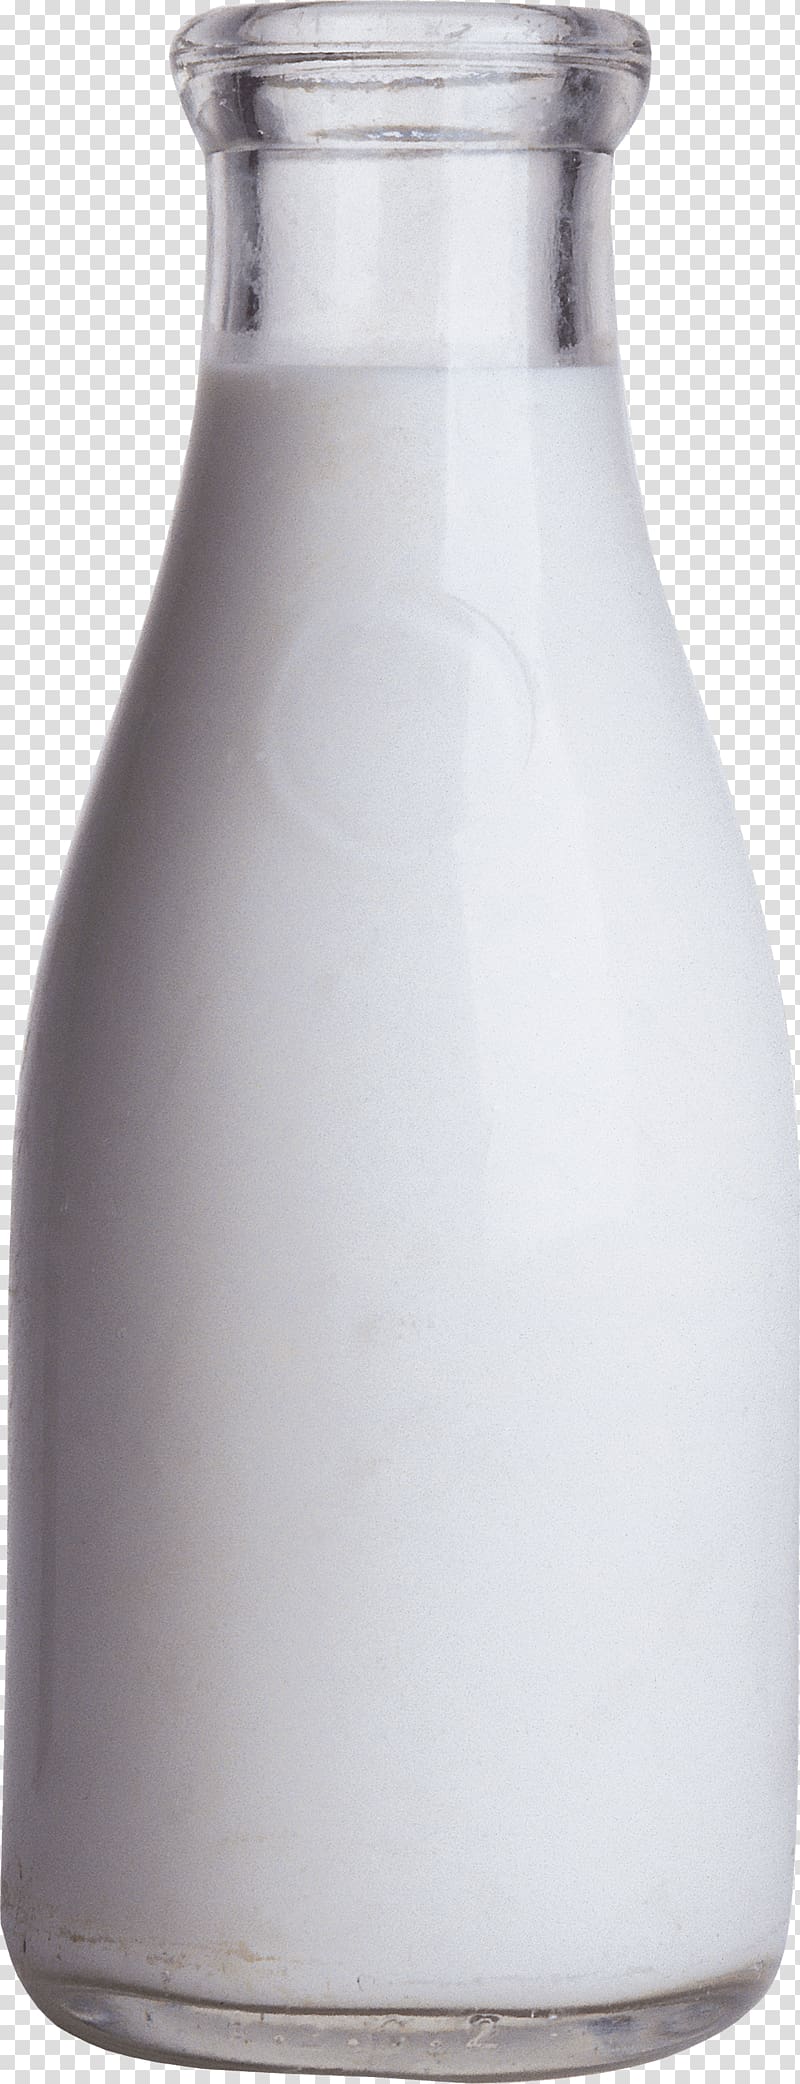 Milk bottle , glass bottle transparent background PNG clipart